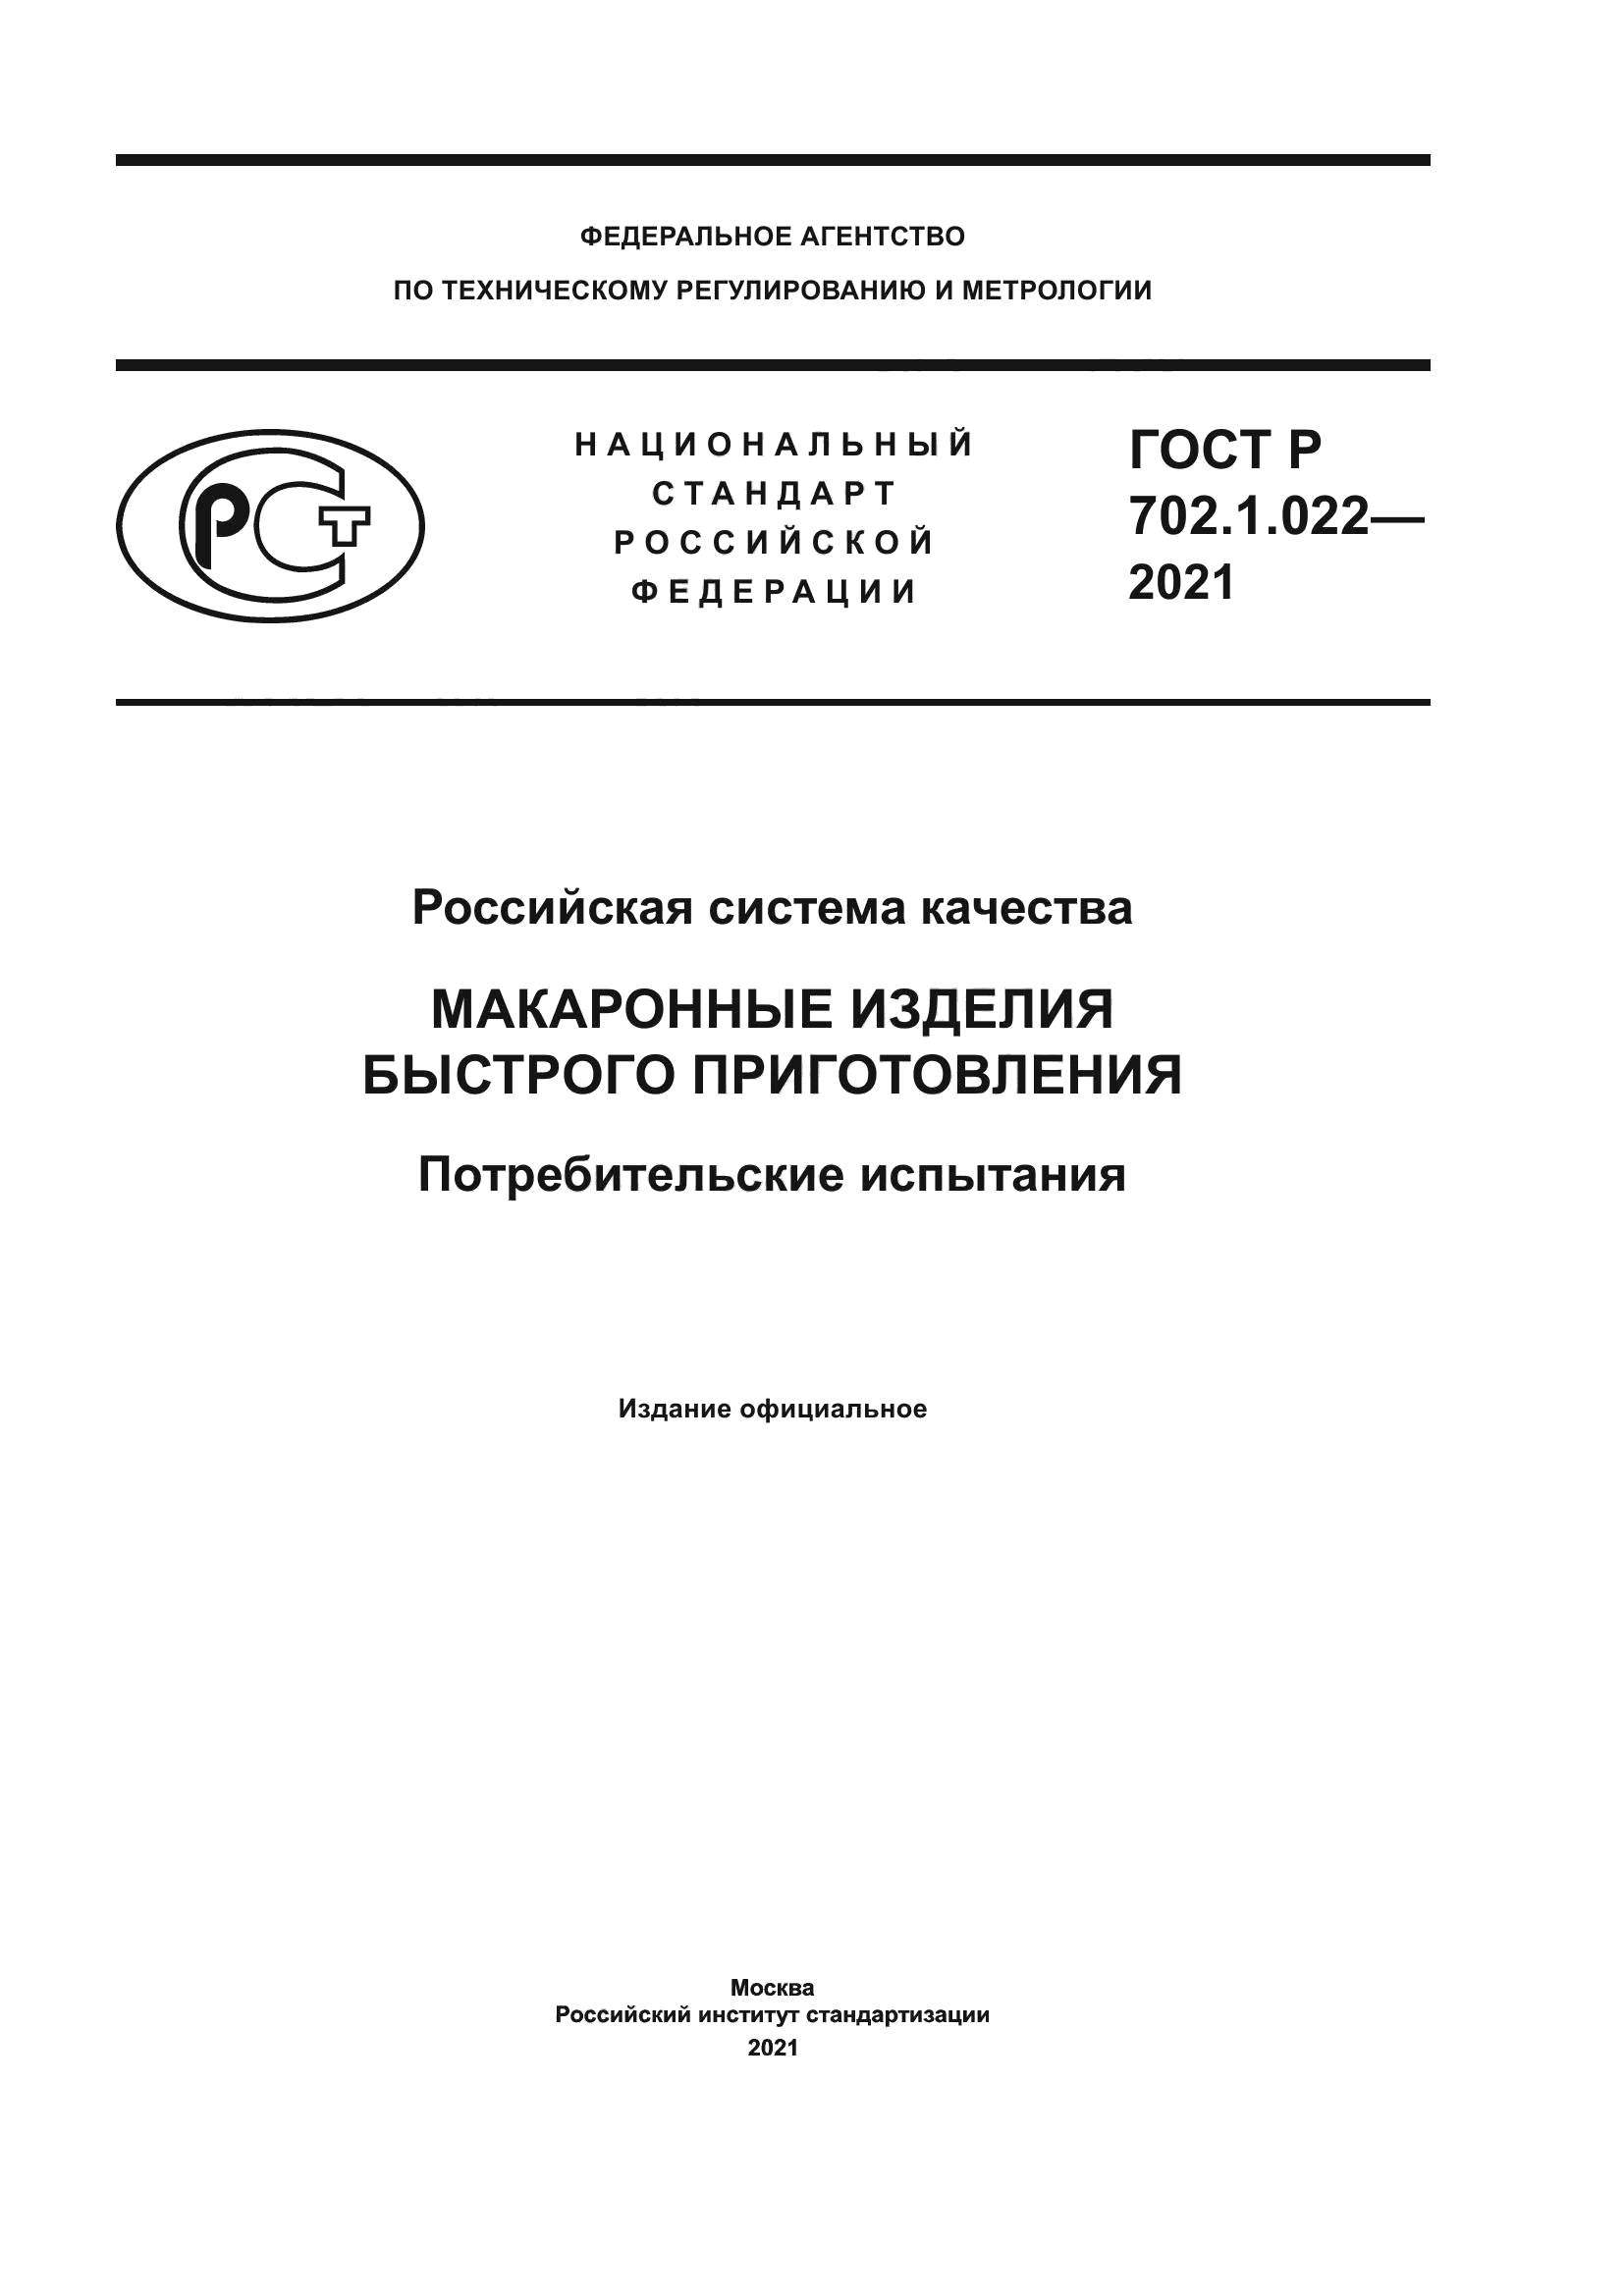 ГОСТ Р 702.1.022-2021